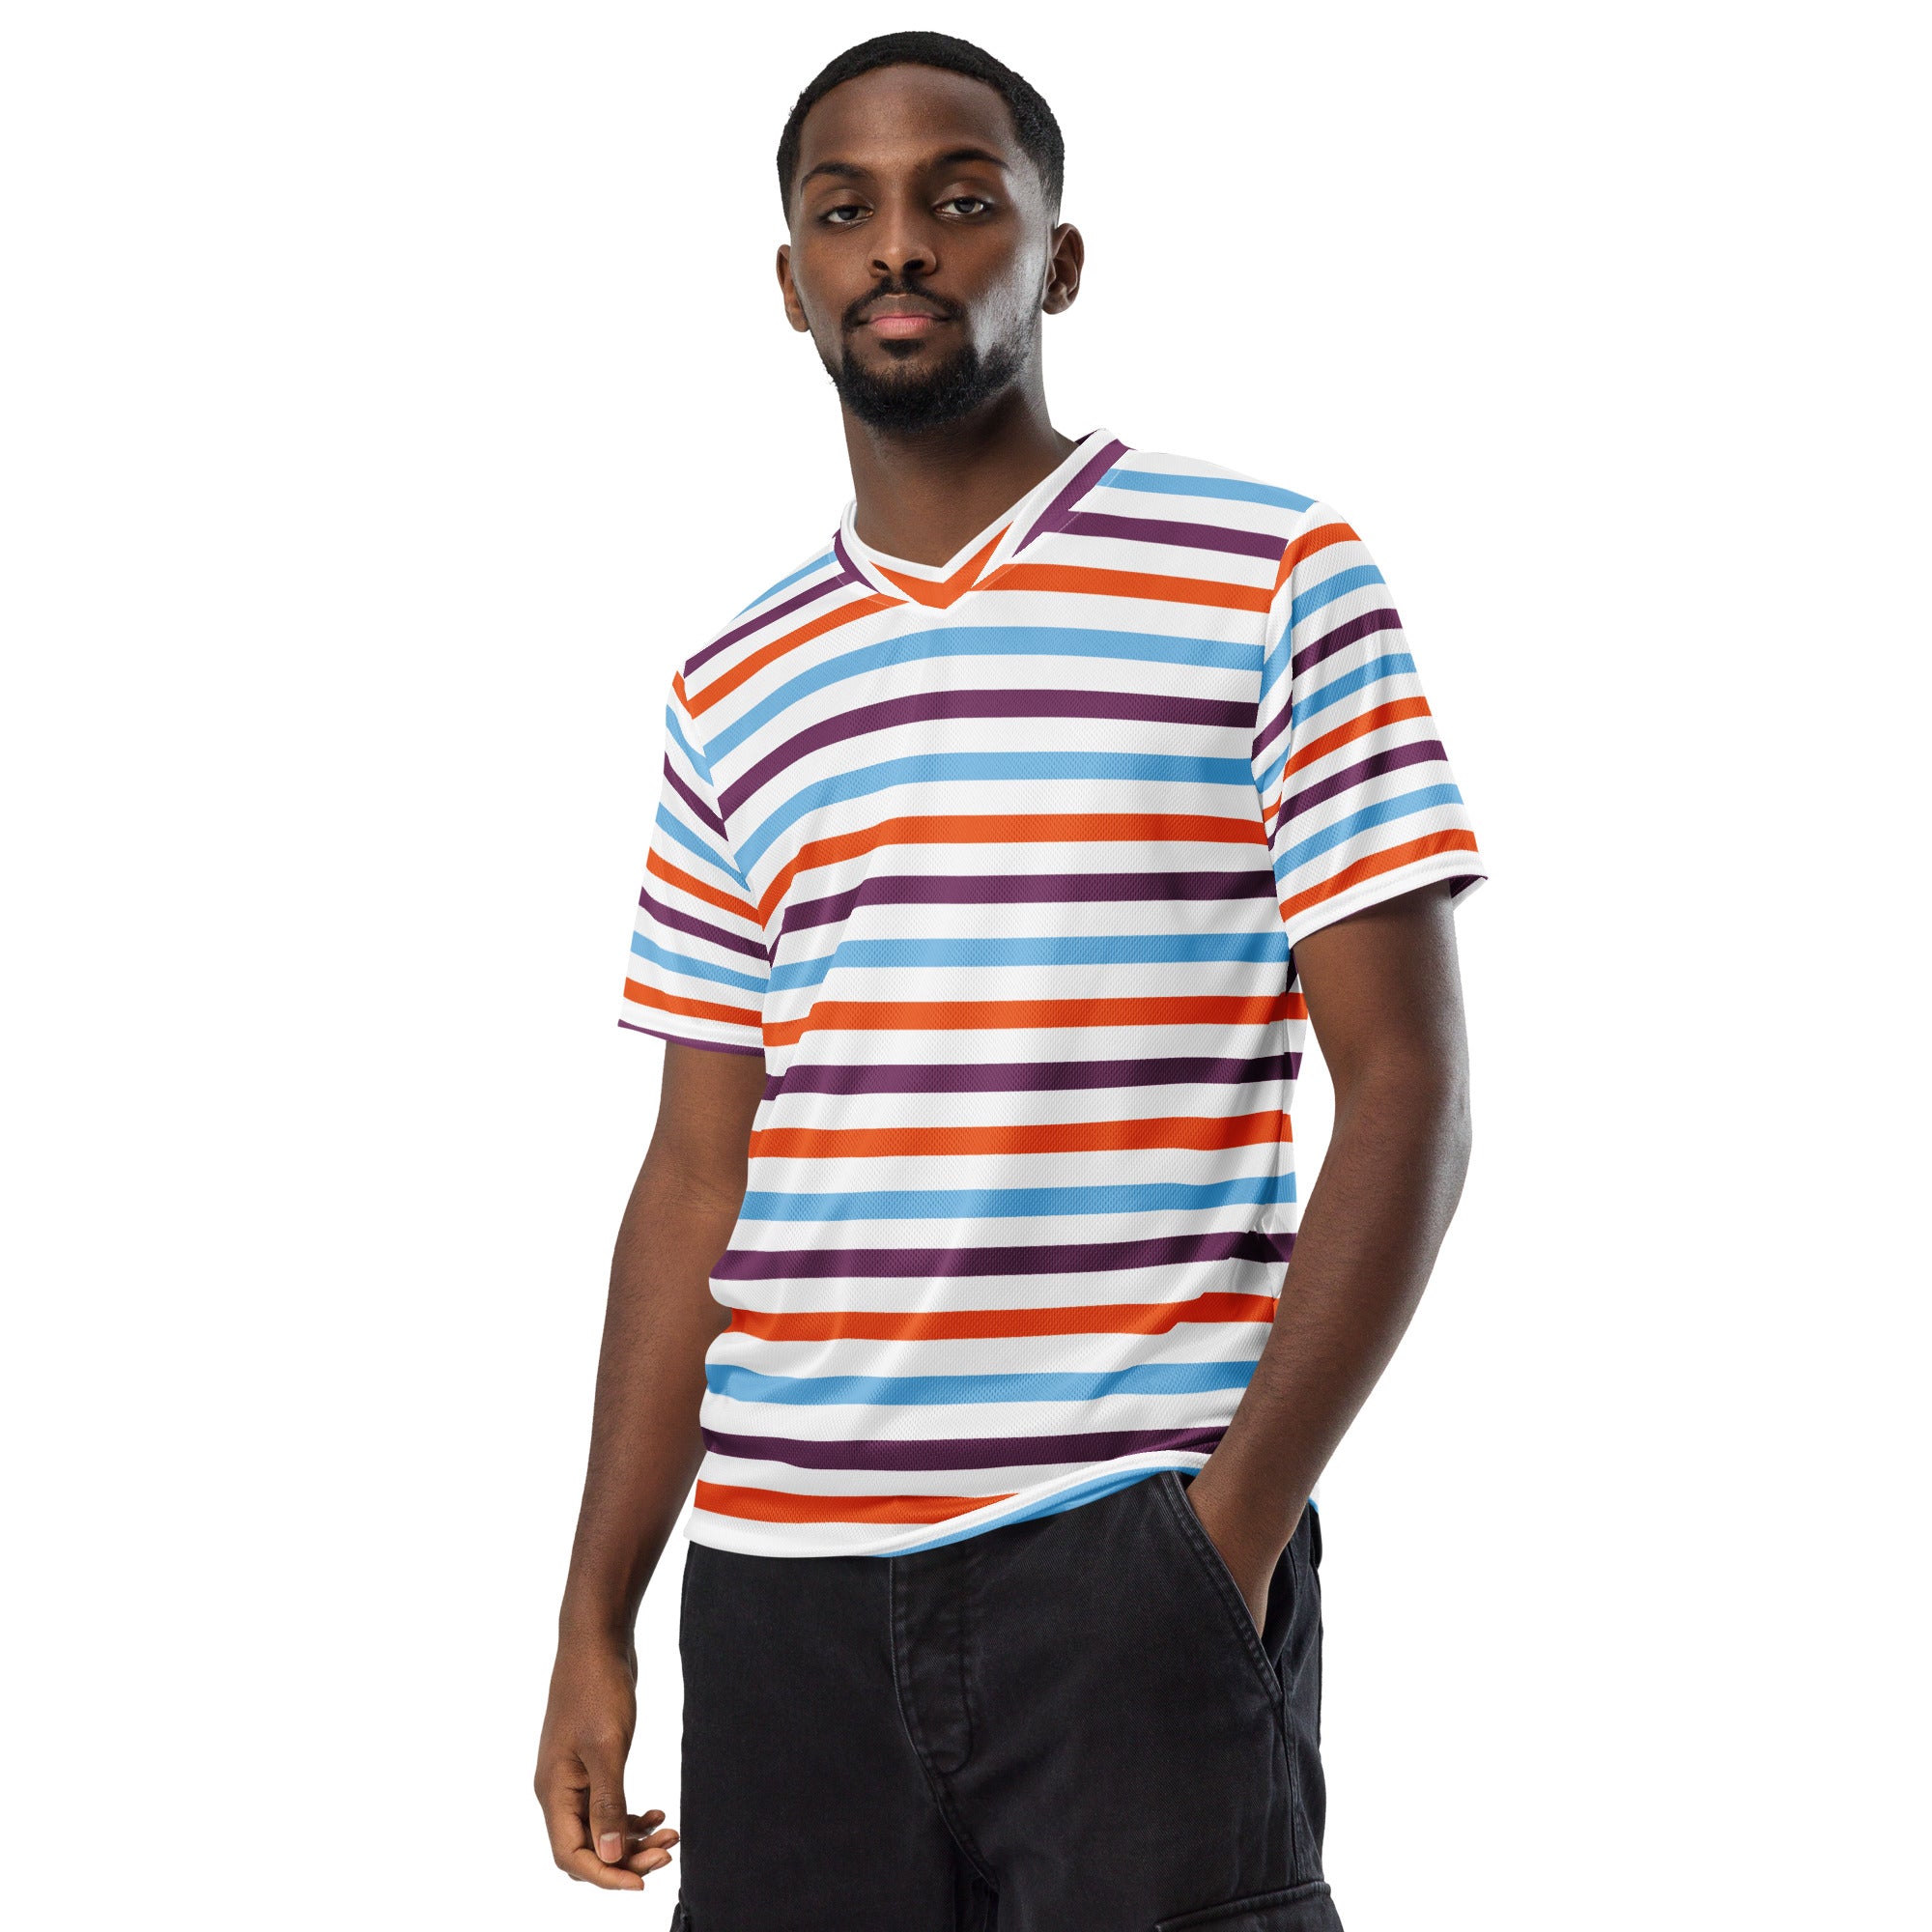 Hoodies4You "Look Like Ken" "Halloween" Blue/White Stripe Shirt